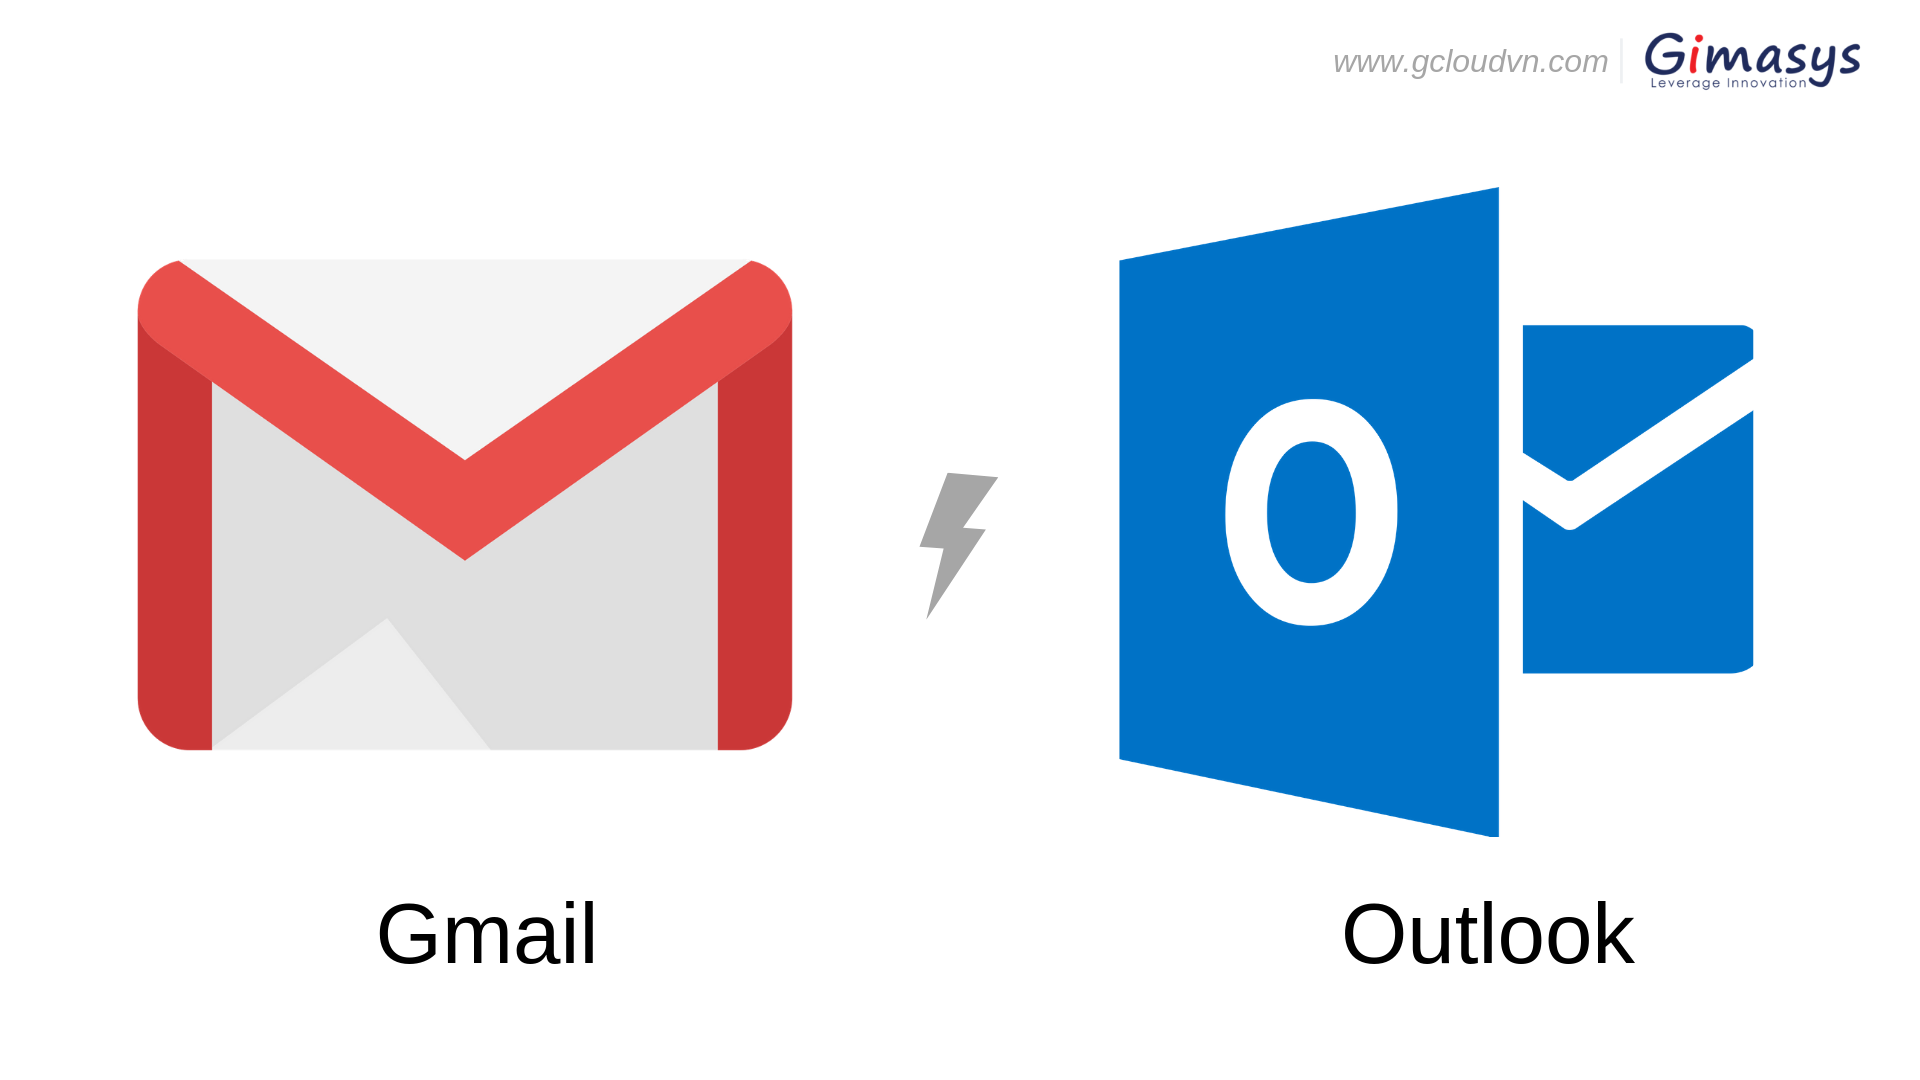 Users gmail com. Значок электронной почты. Значок Outlook. Значок почты гмайл.